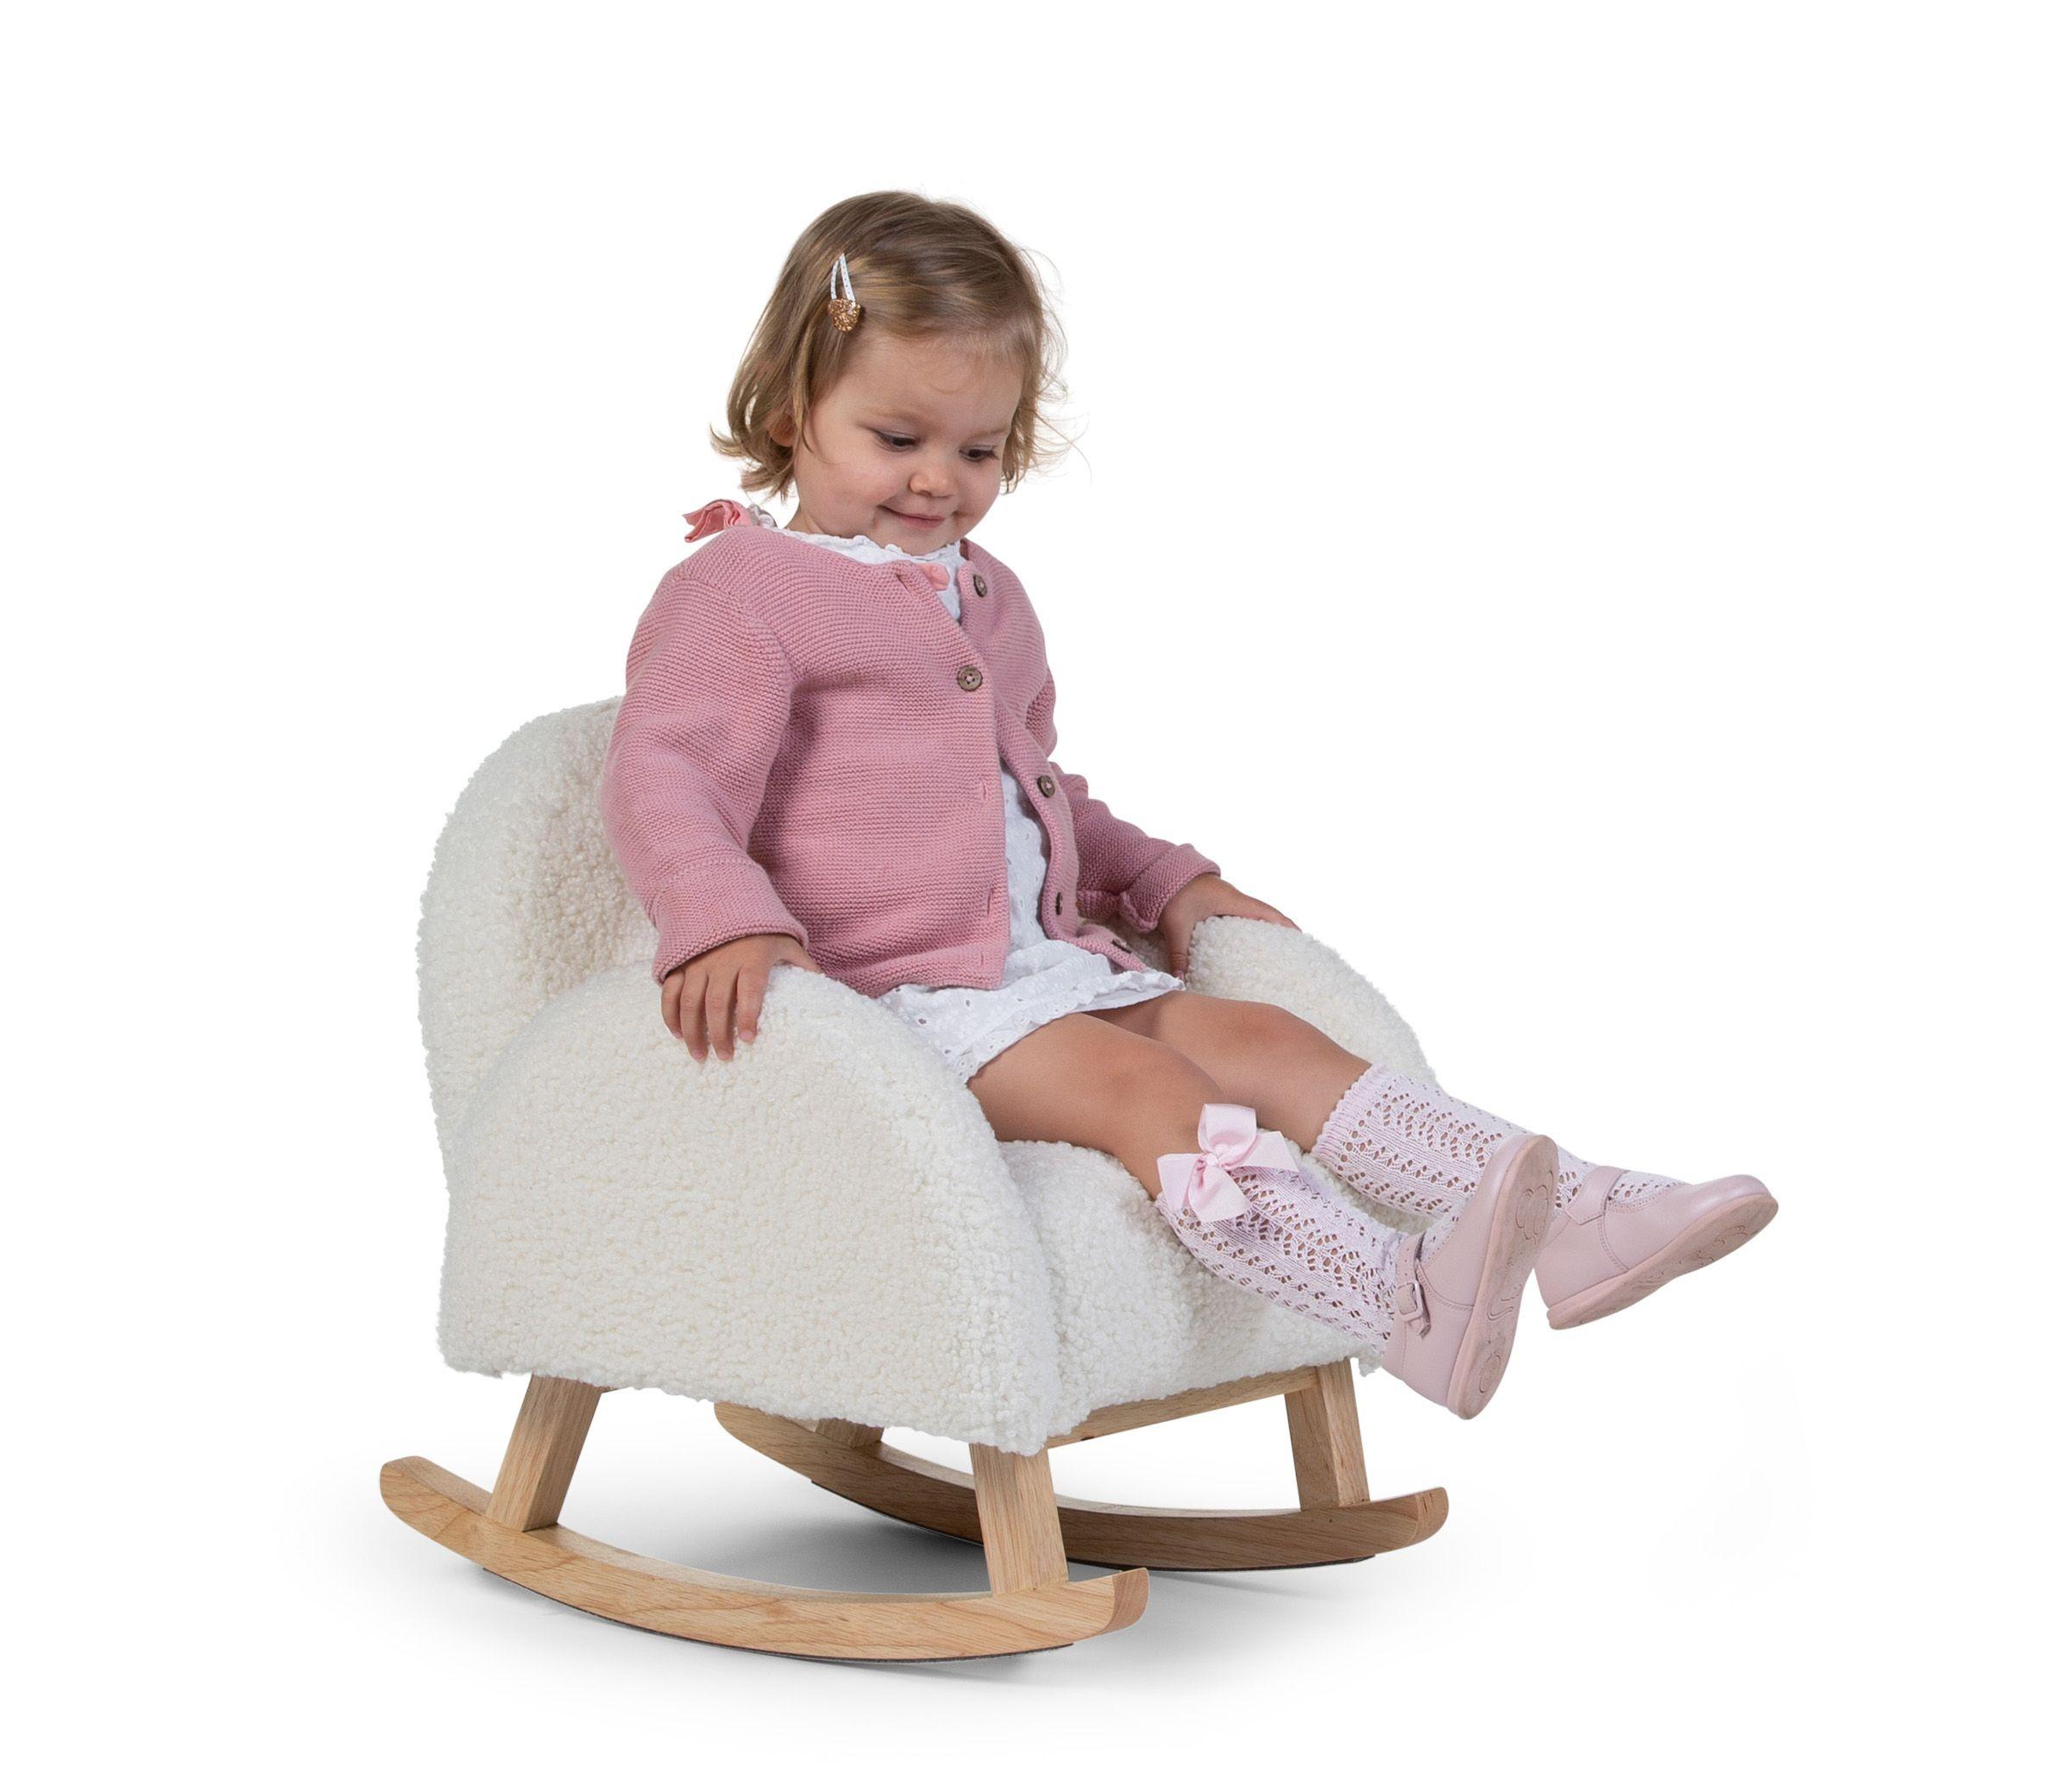 Afleiden stout cijfer Childhome - Schommelstoel voor kinderen teddy wit | Childhome - Wit | 36953